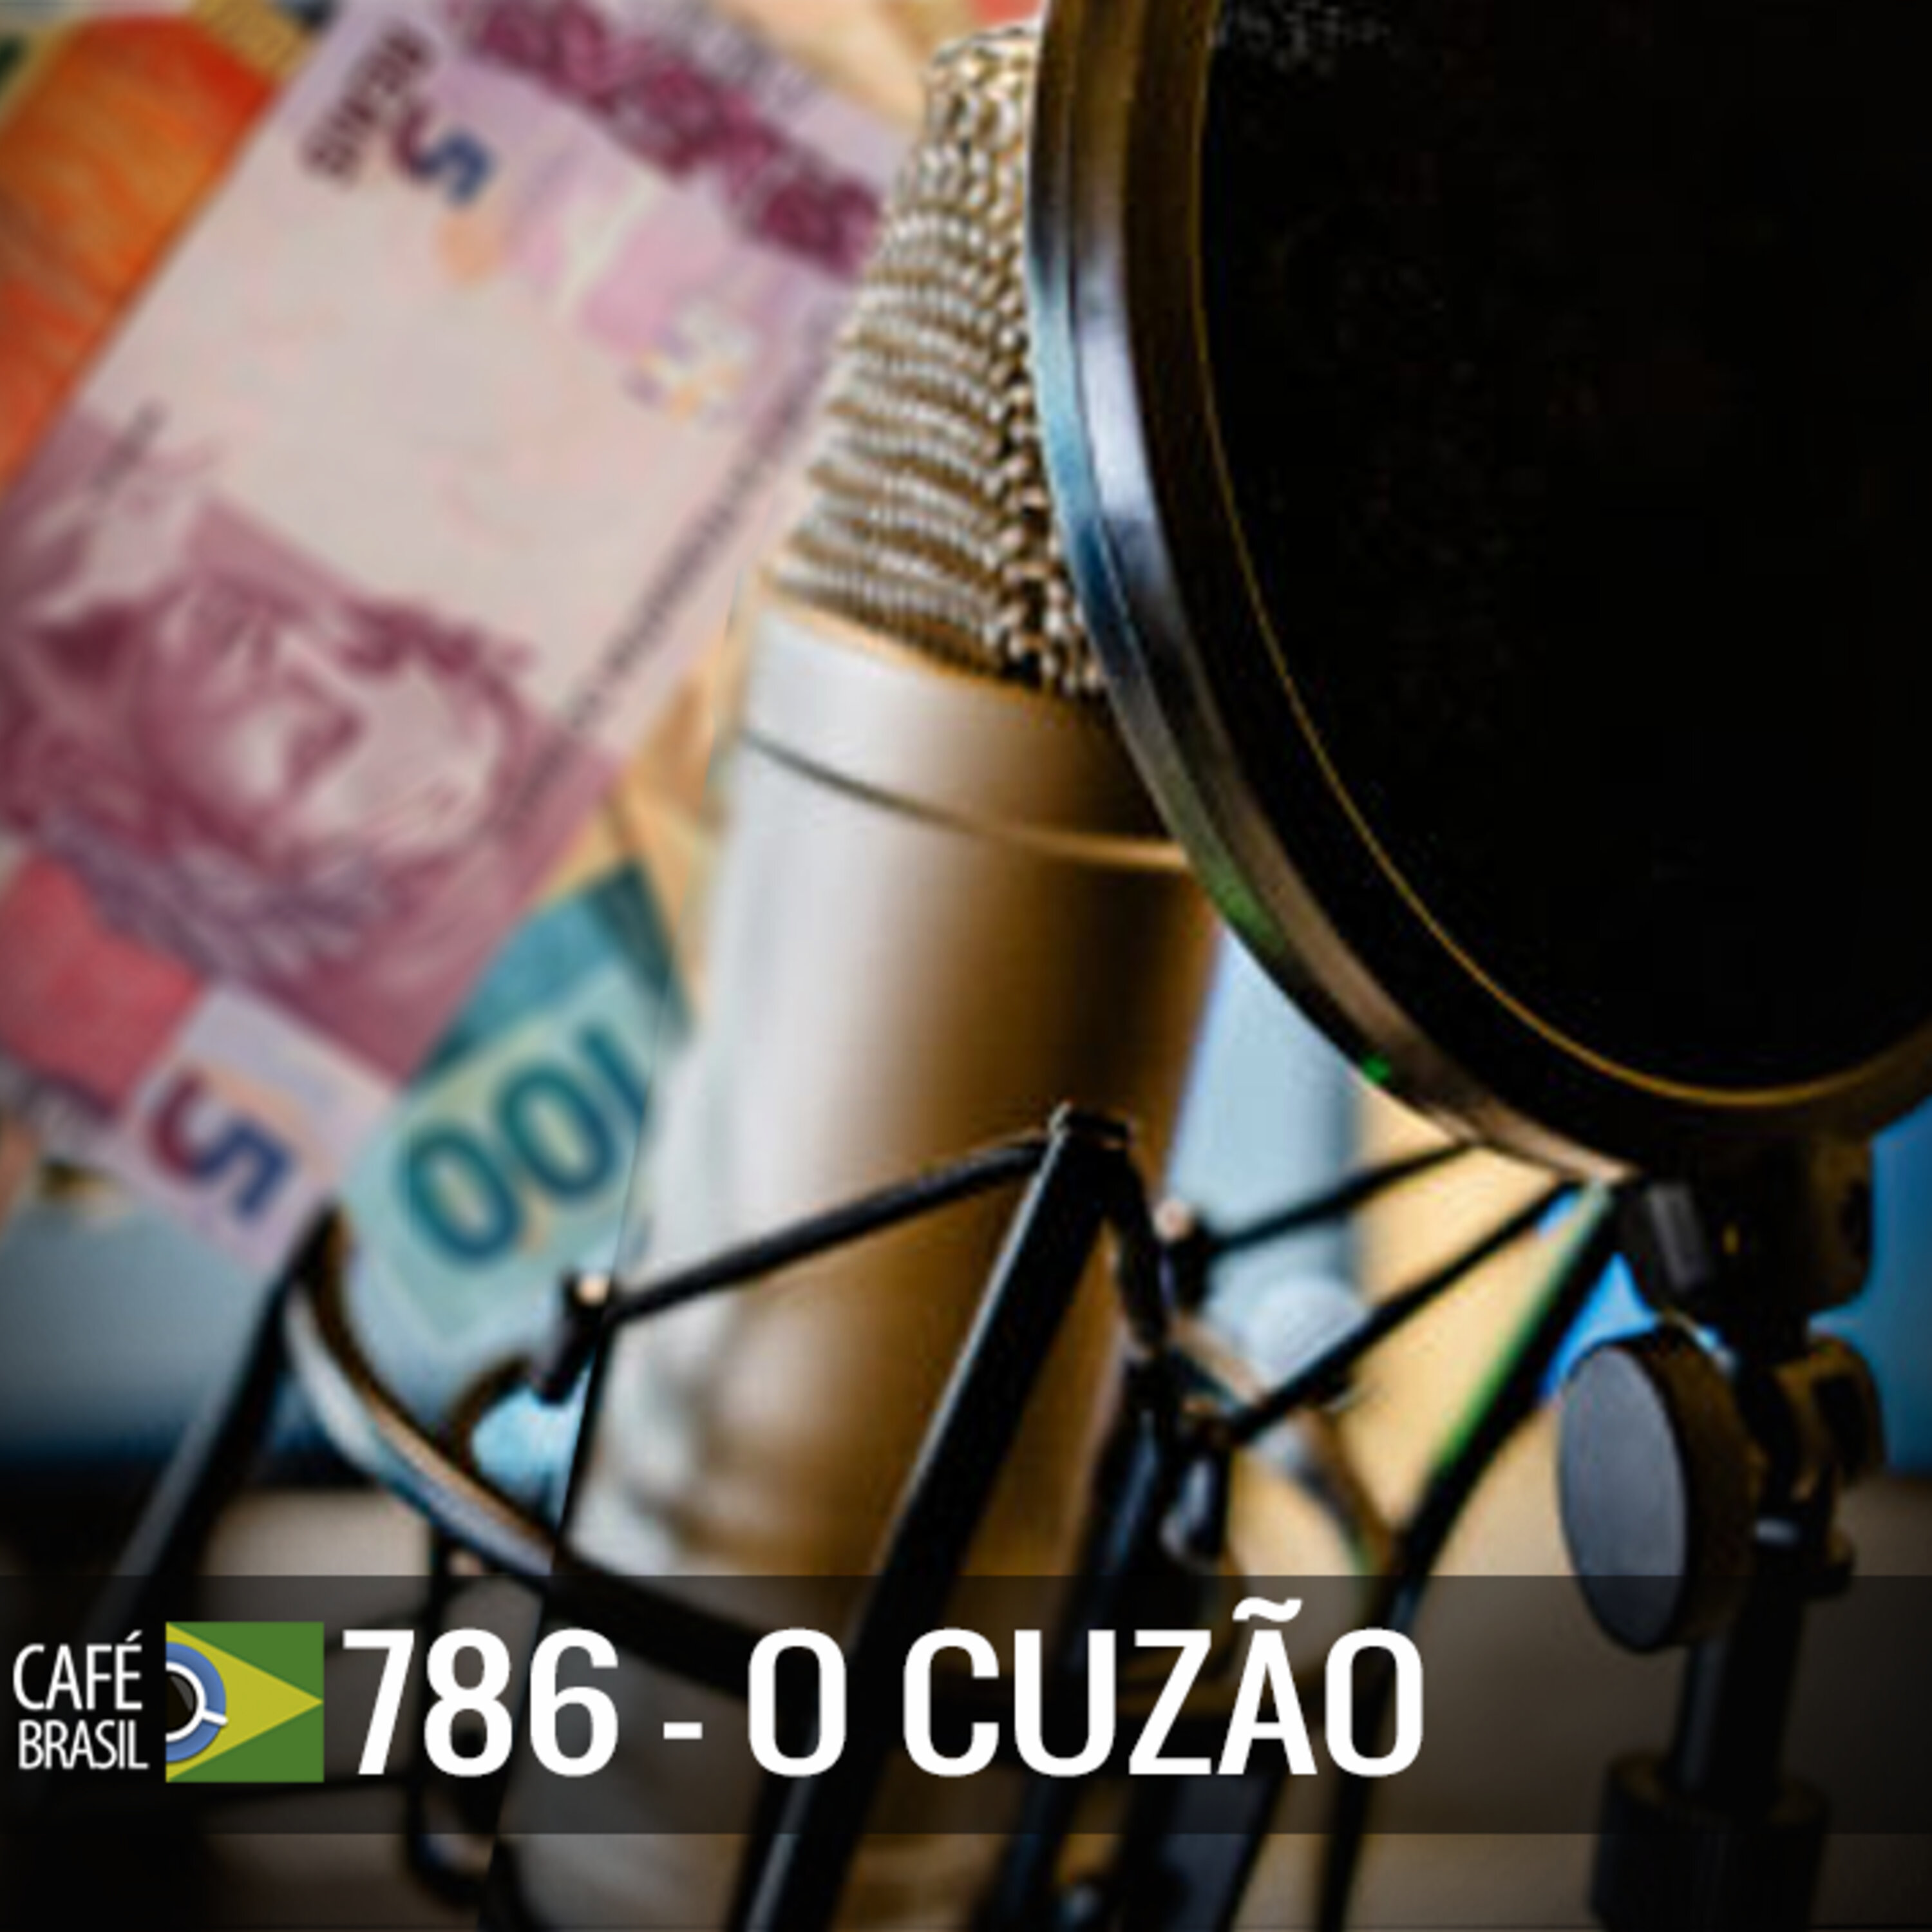 Cafe Brasil 786 - O Cuzao